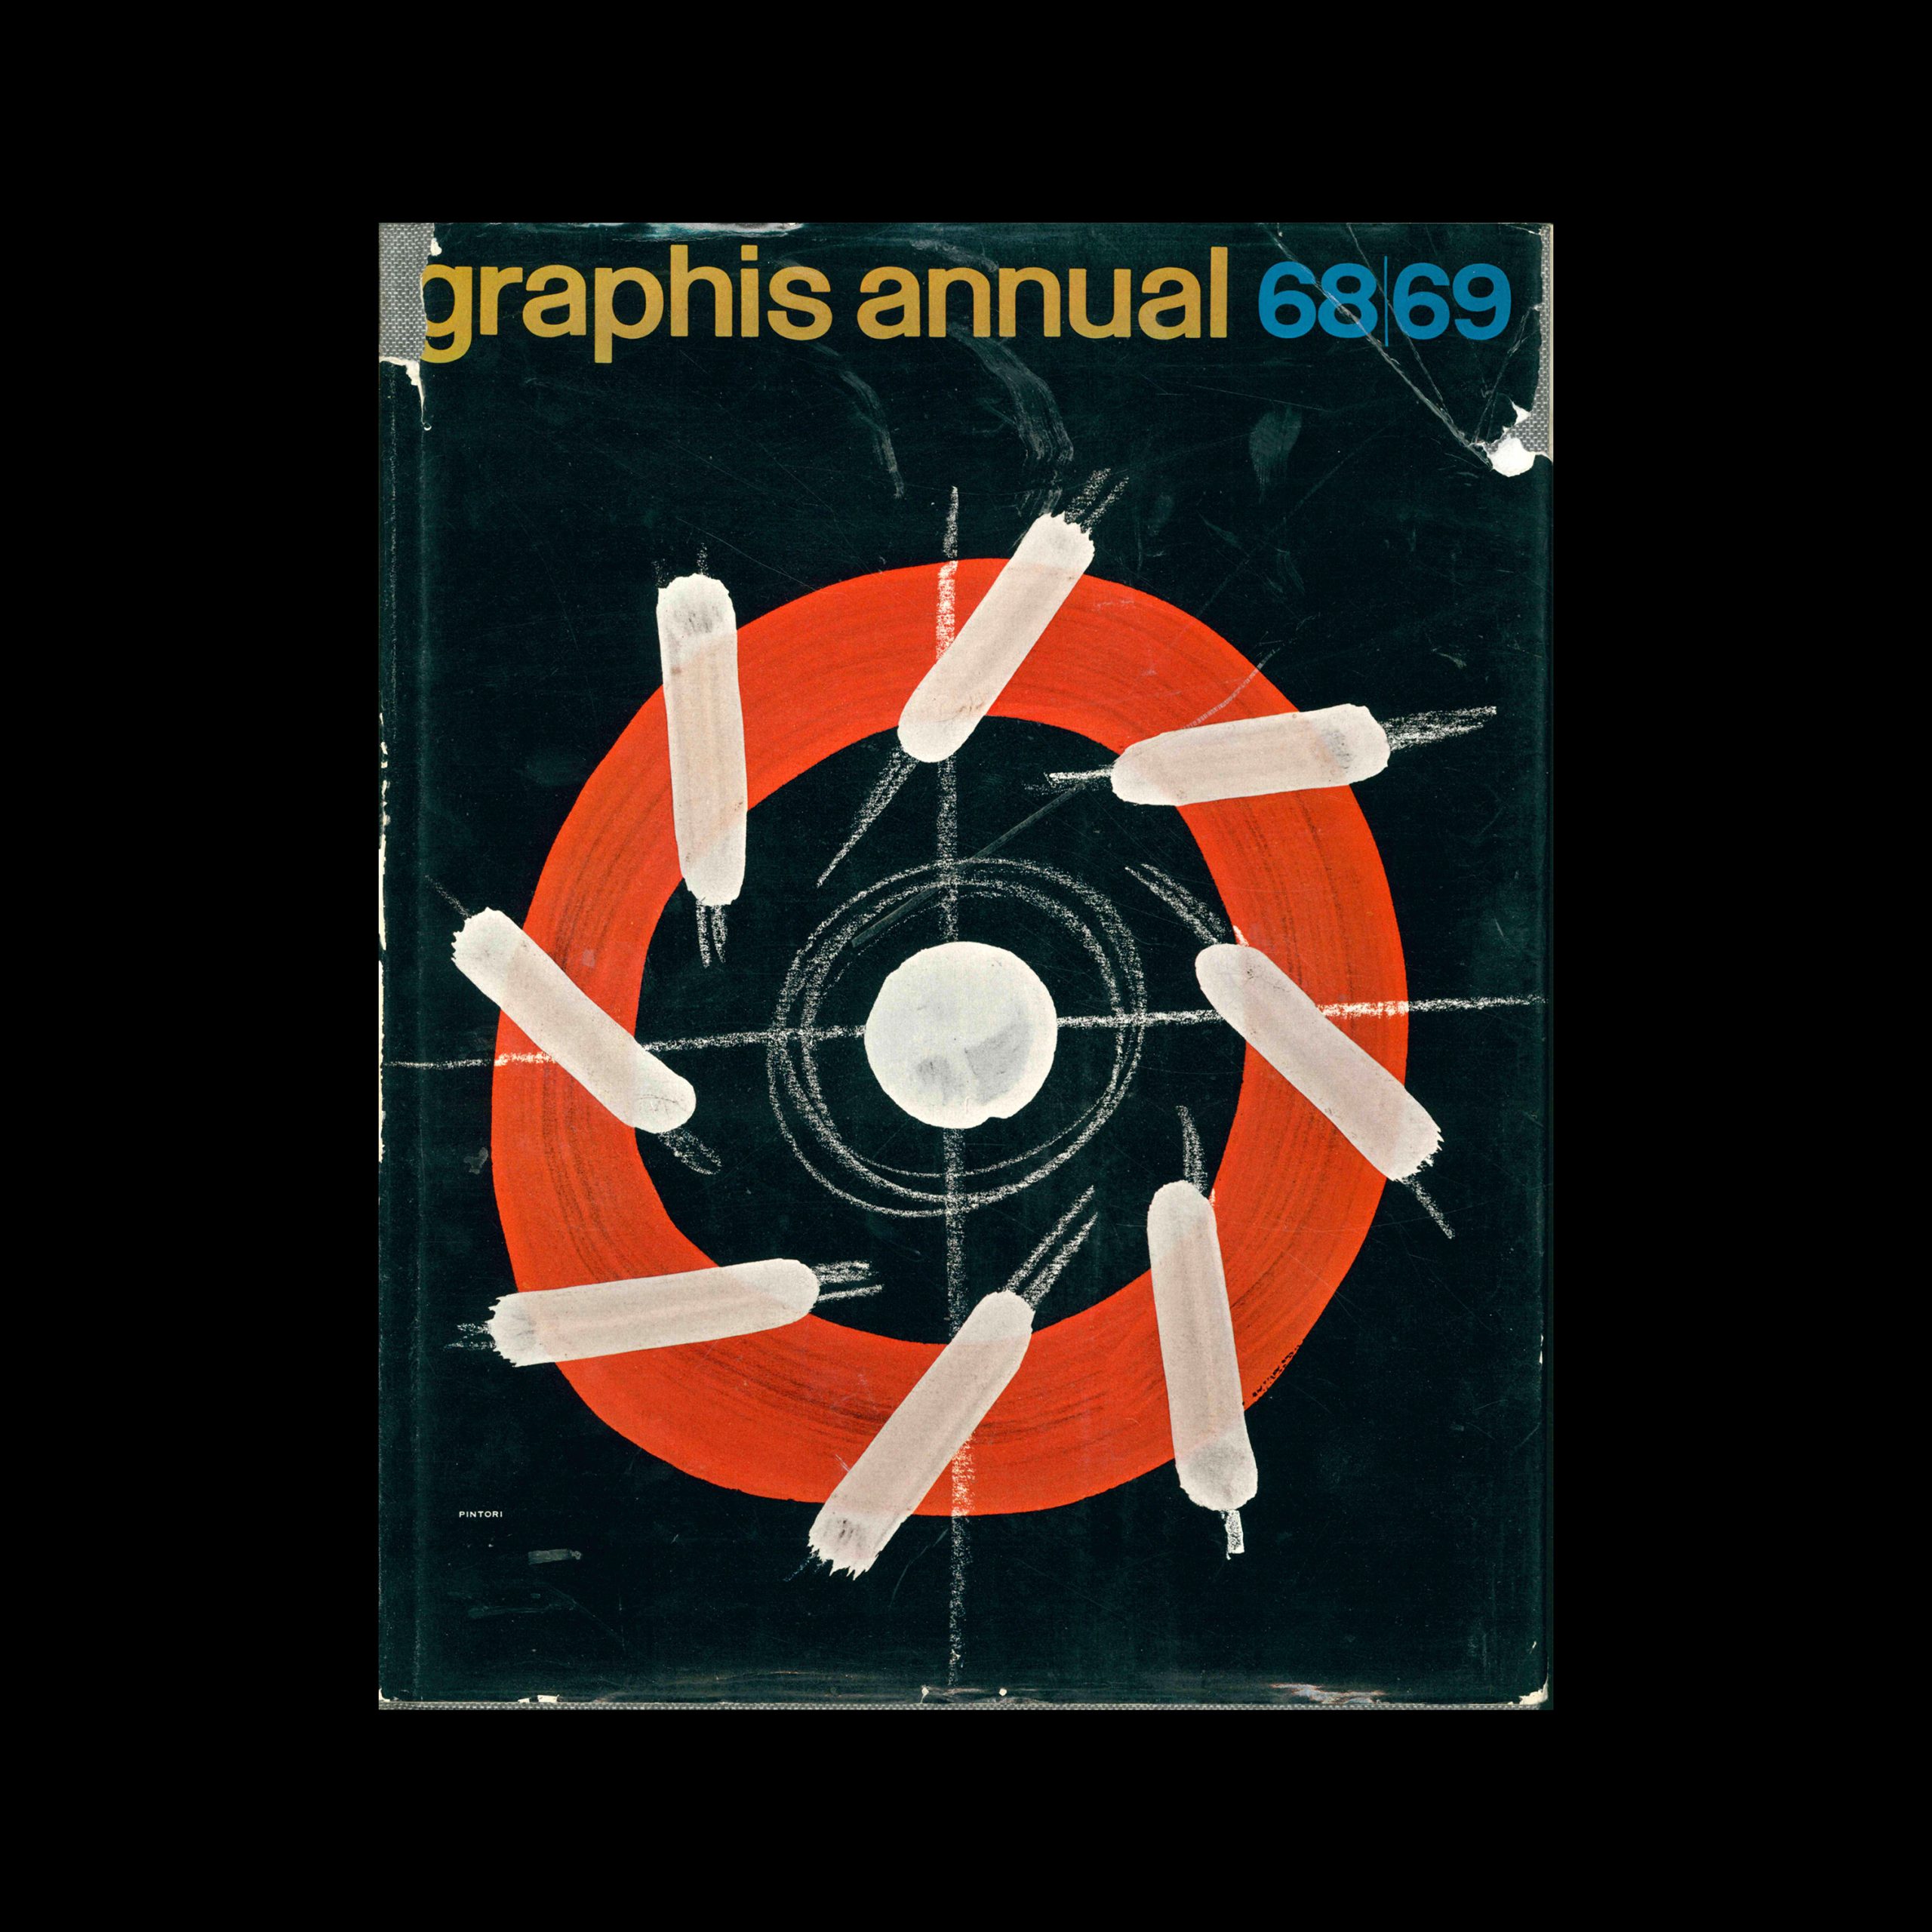 Graphis Annual 1968|69. Cover design by Giovanni Pintori 